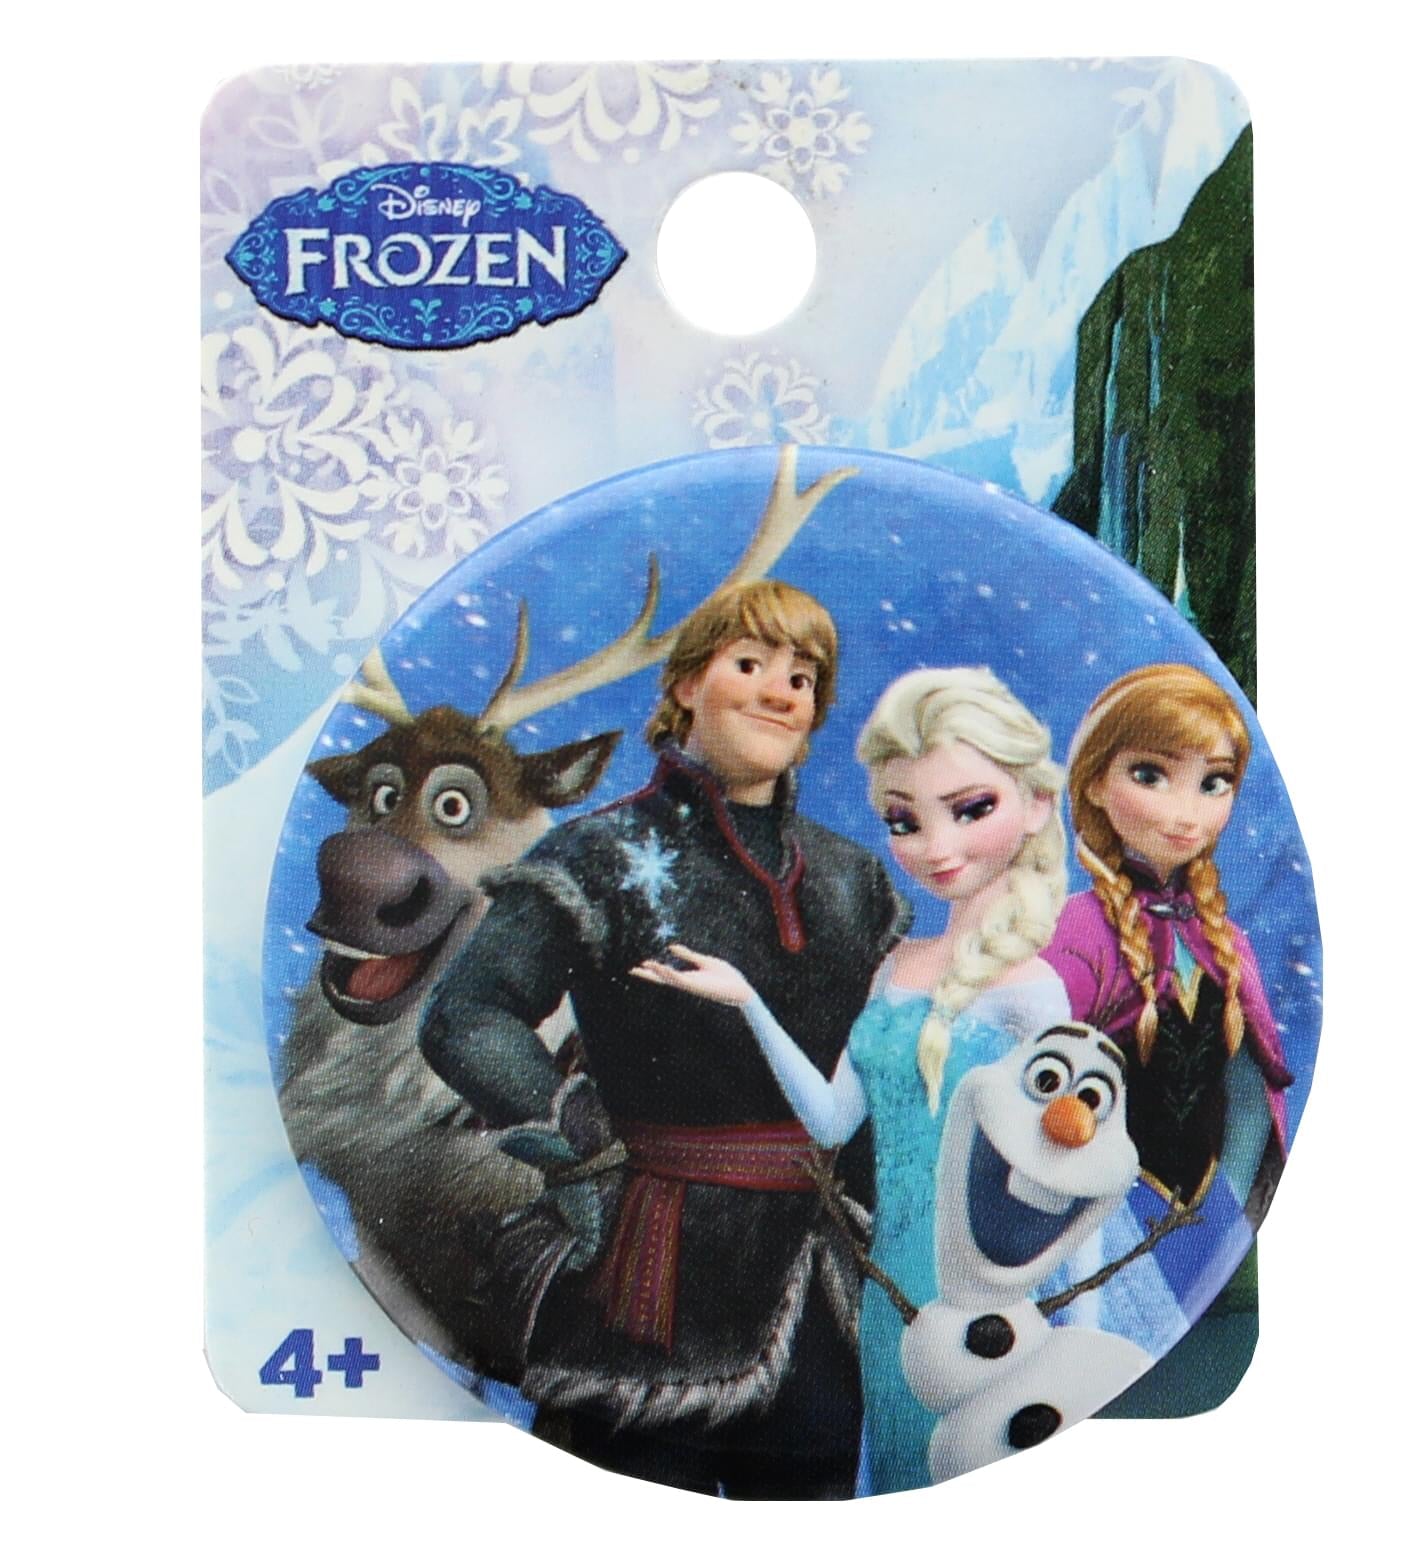 Disney's Frozen 1.5" Button: "Group Shot"